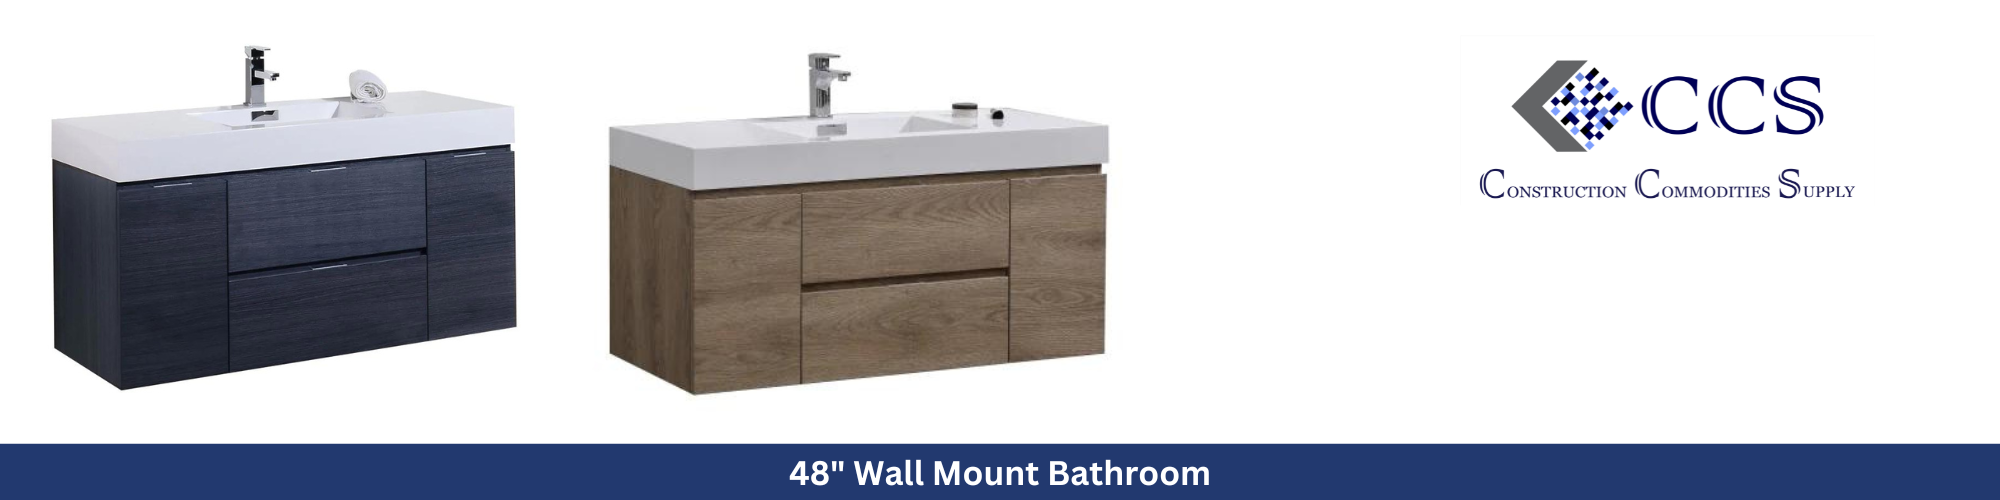 48" Wall Mount Bathroom Vanity